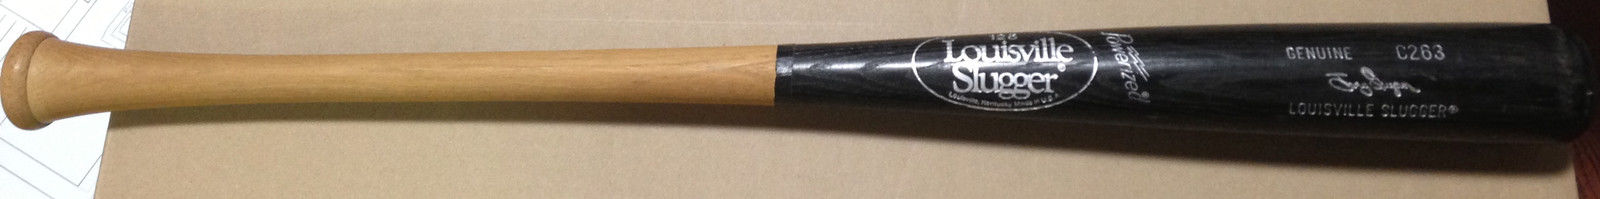 Tony Gwynn Game Issued 2 Toned Louisville Slugger Baseball Bat Padres